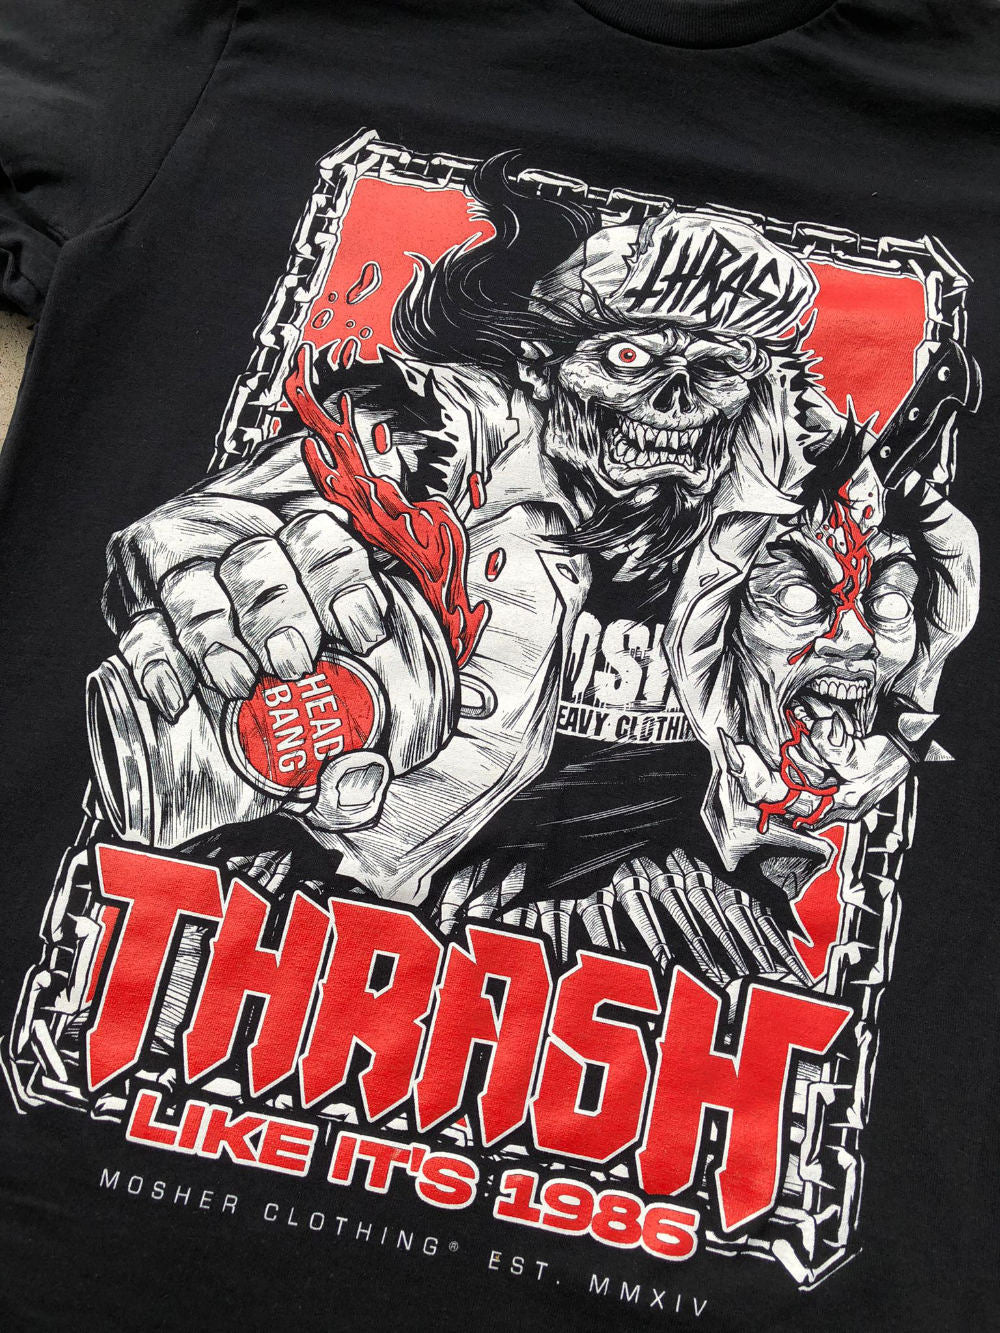 Thrash Like It's 1986 II Tshirt by Mosher Clothing for metalheads worldwide